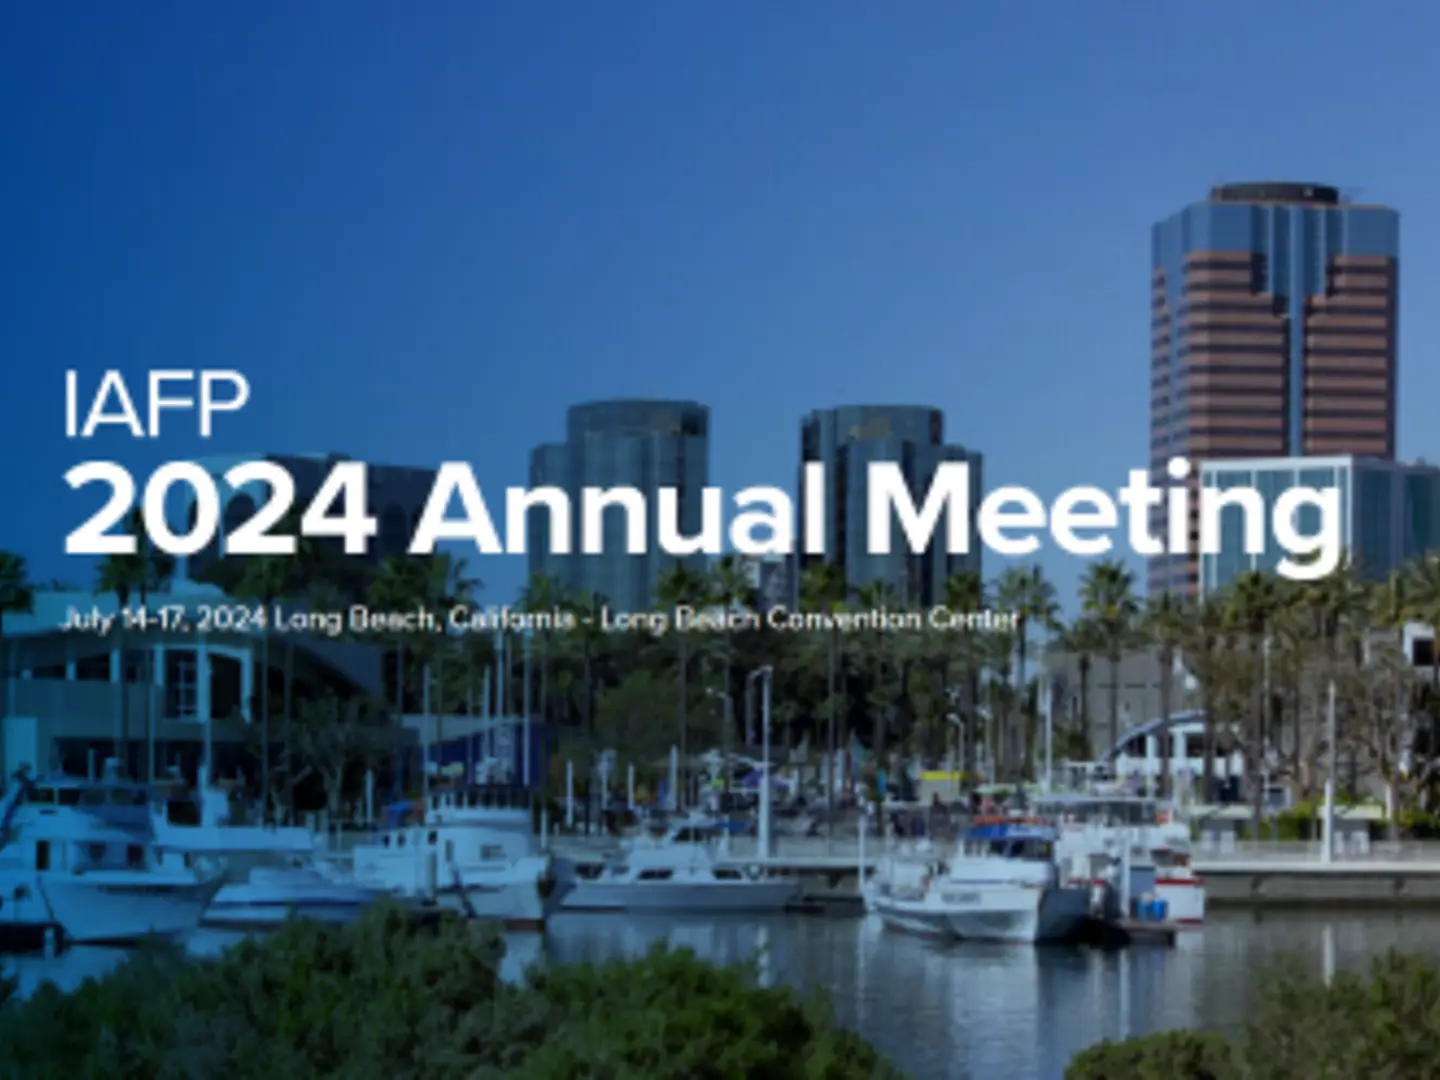 Photo of Long Beach, California with the text IAFP 2024 Annual Meeting overlaid